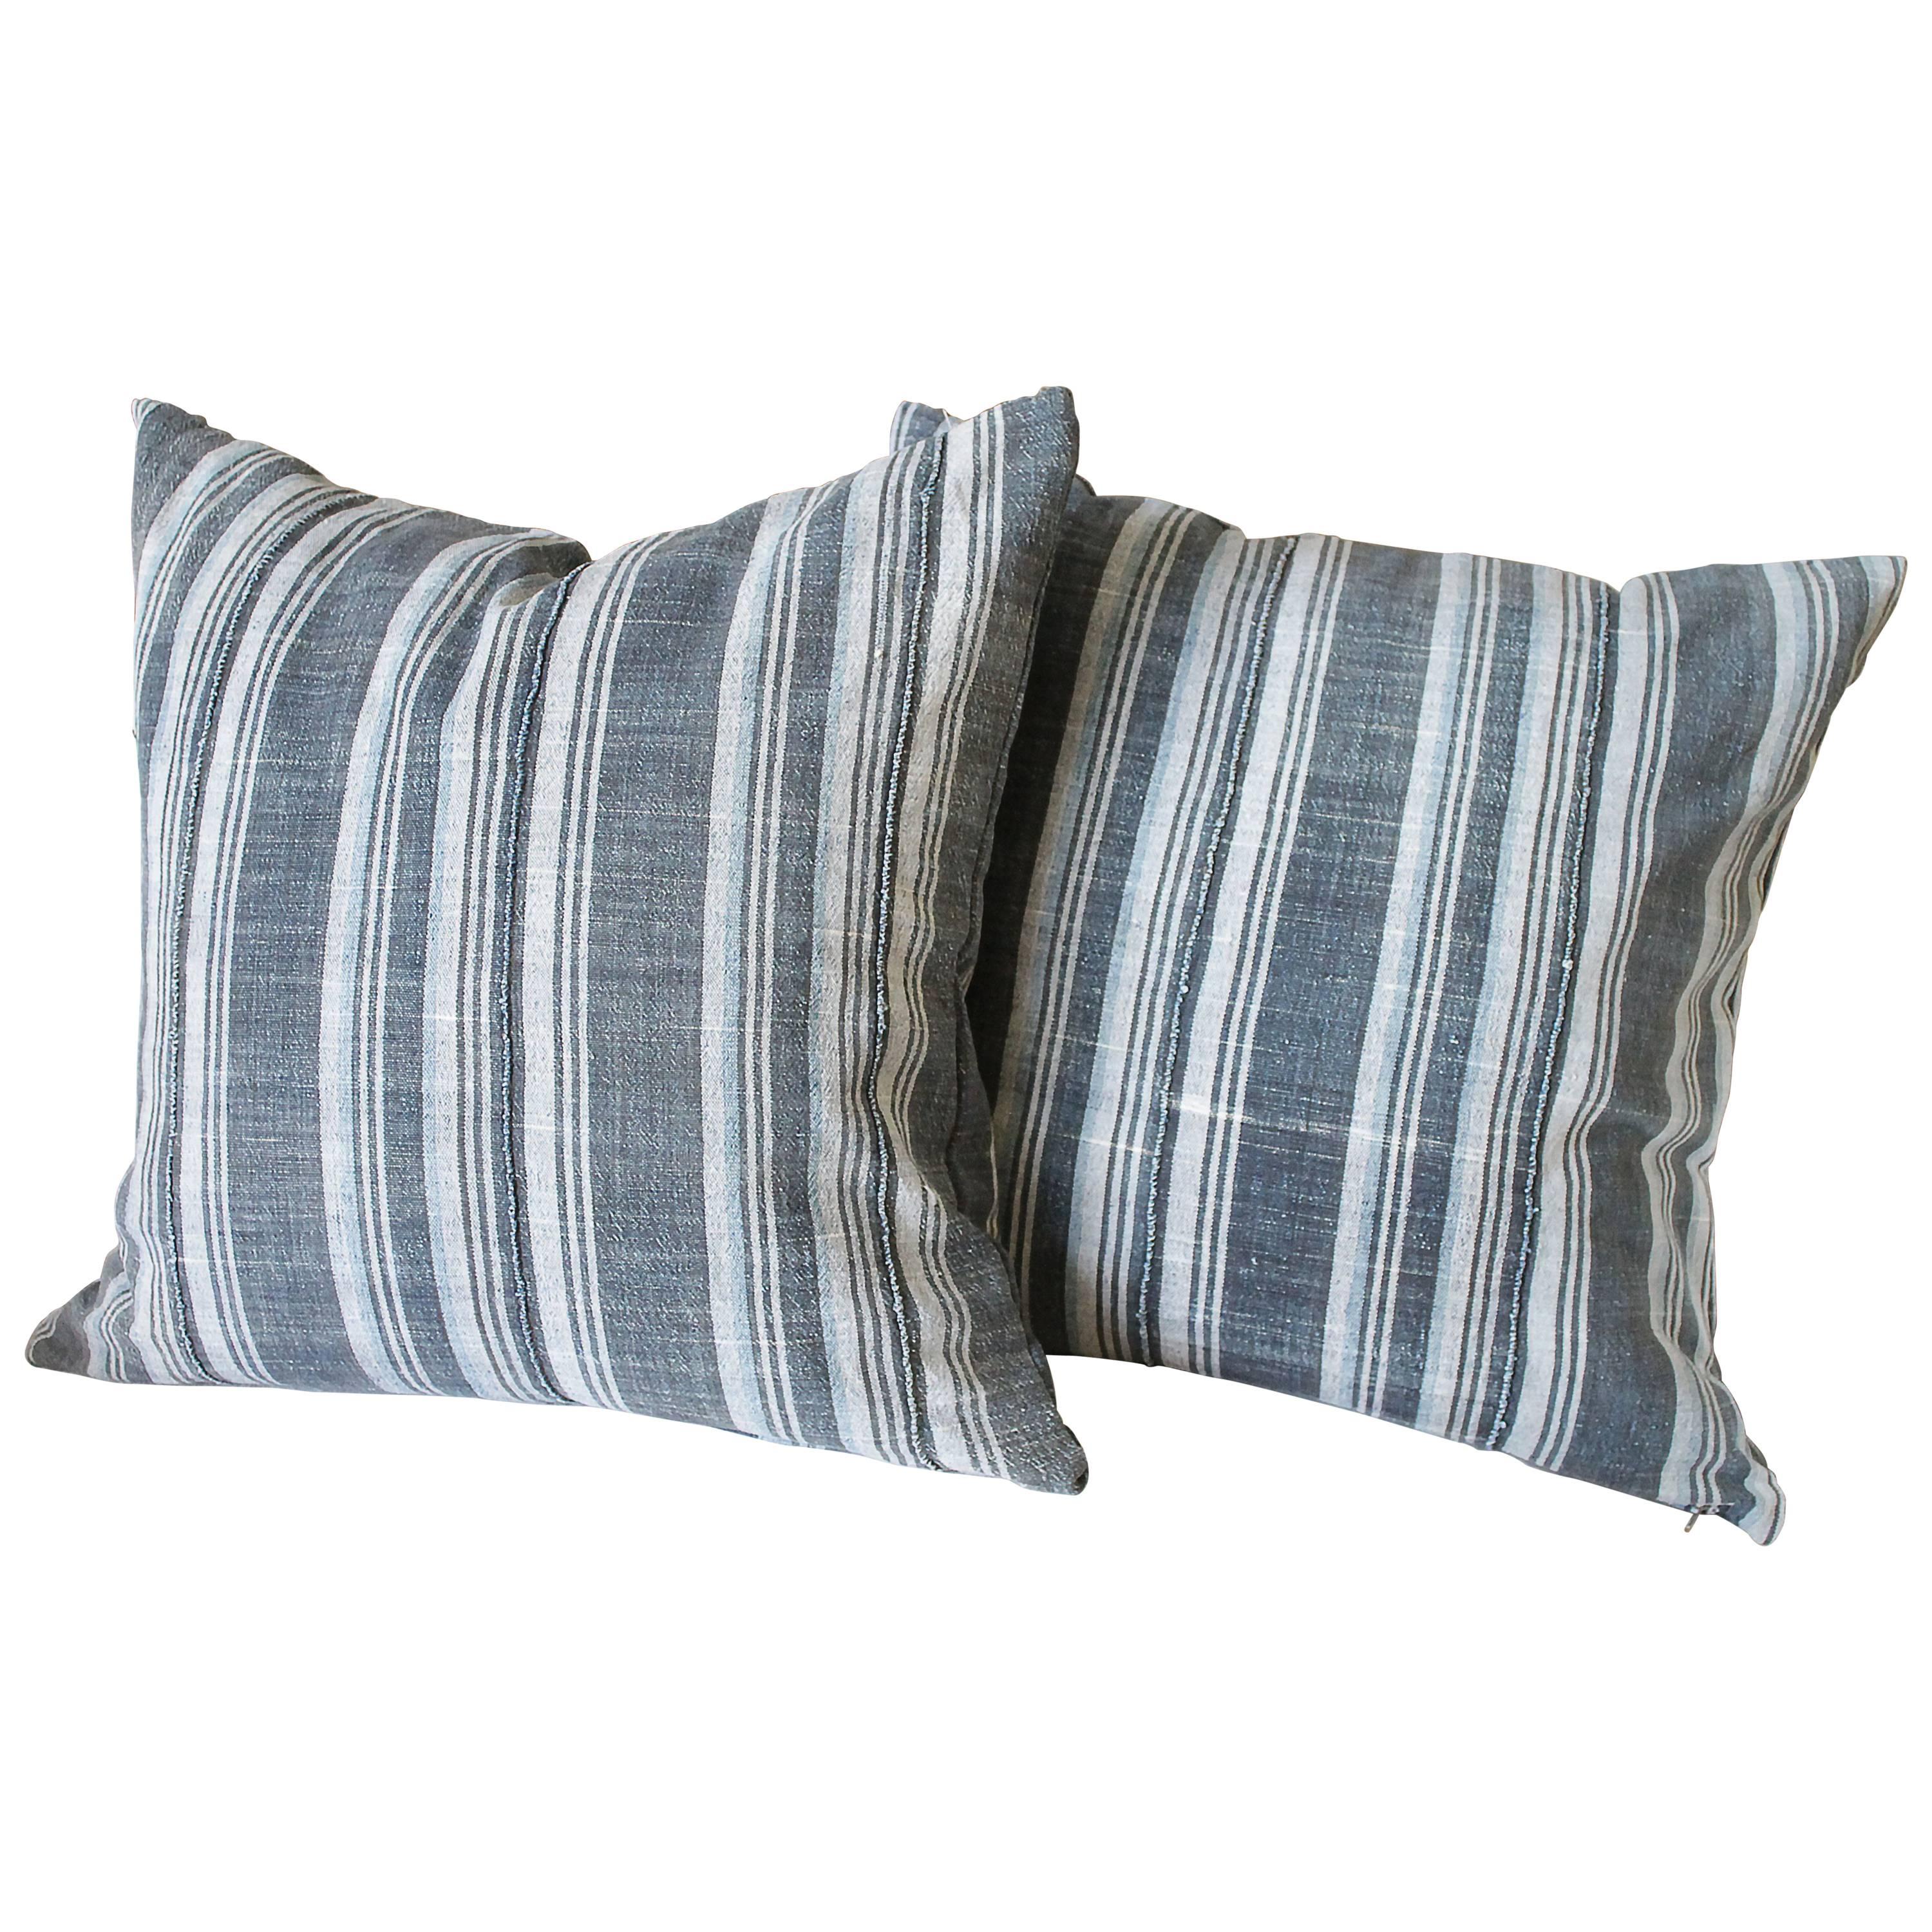 Vintage Indigo Stripe Accent Pillows with Down Insert